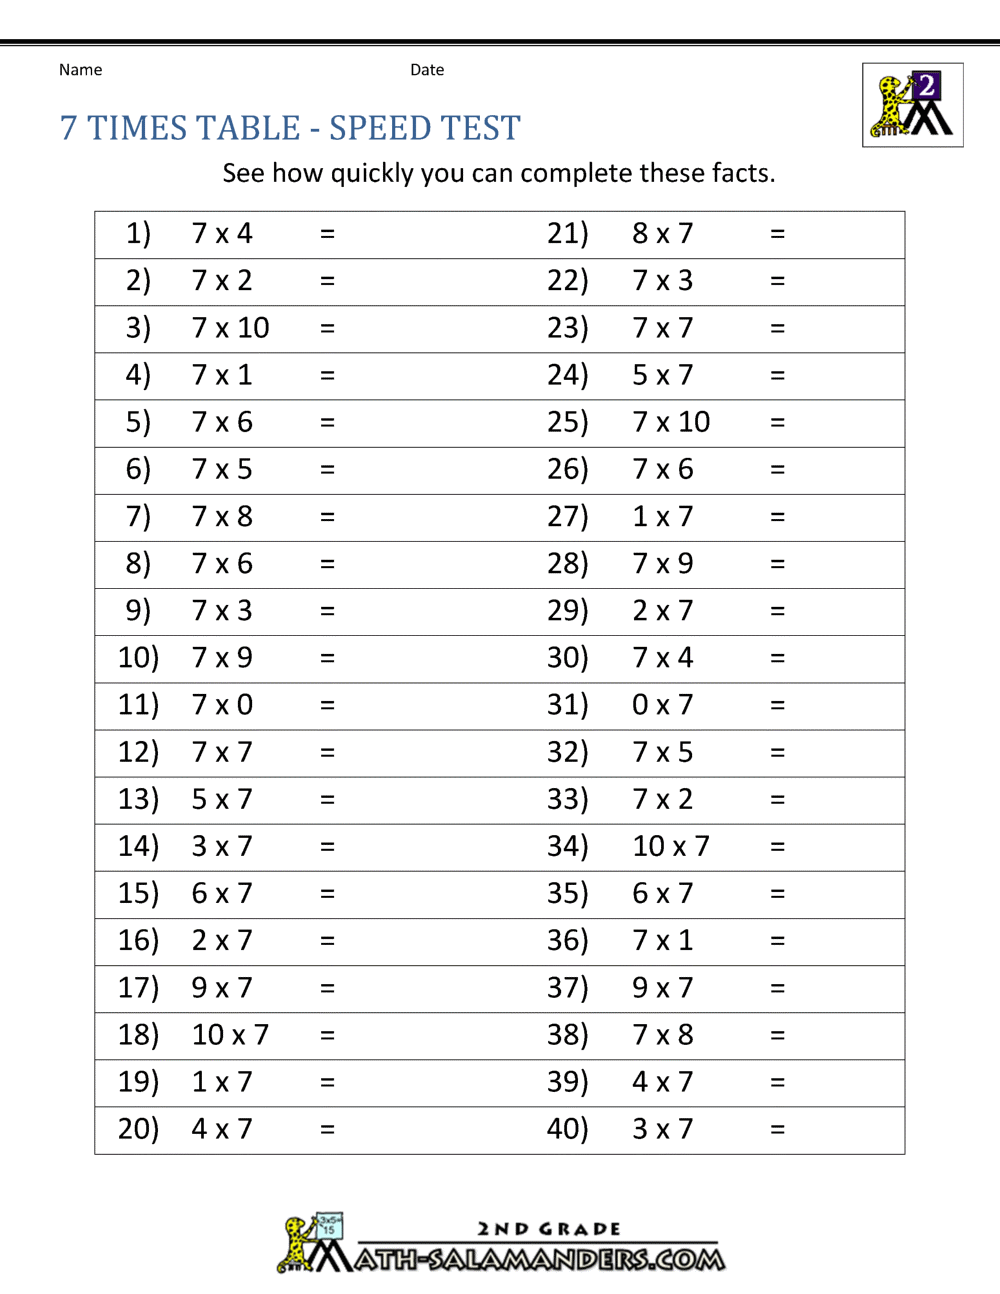 Multiplication Worksheets For 7x